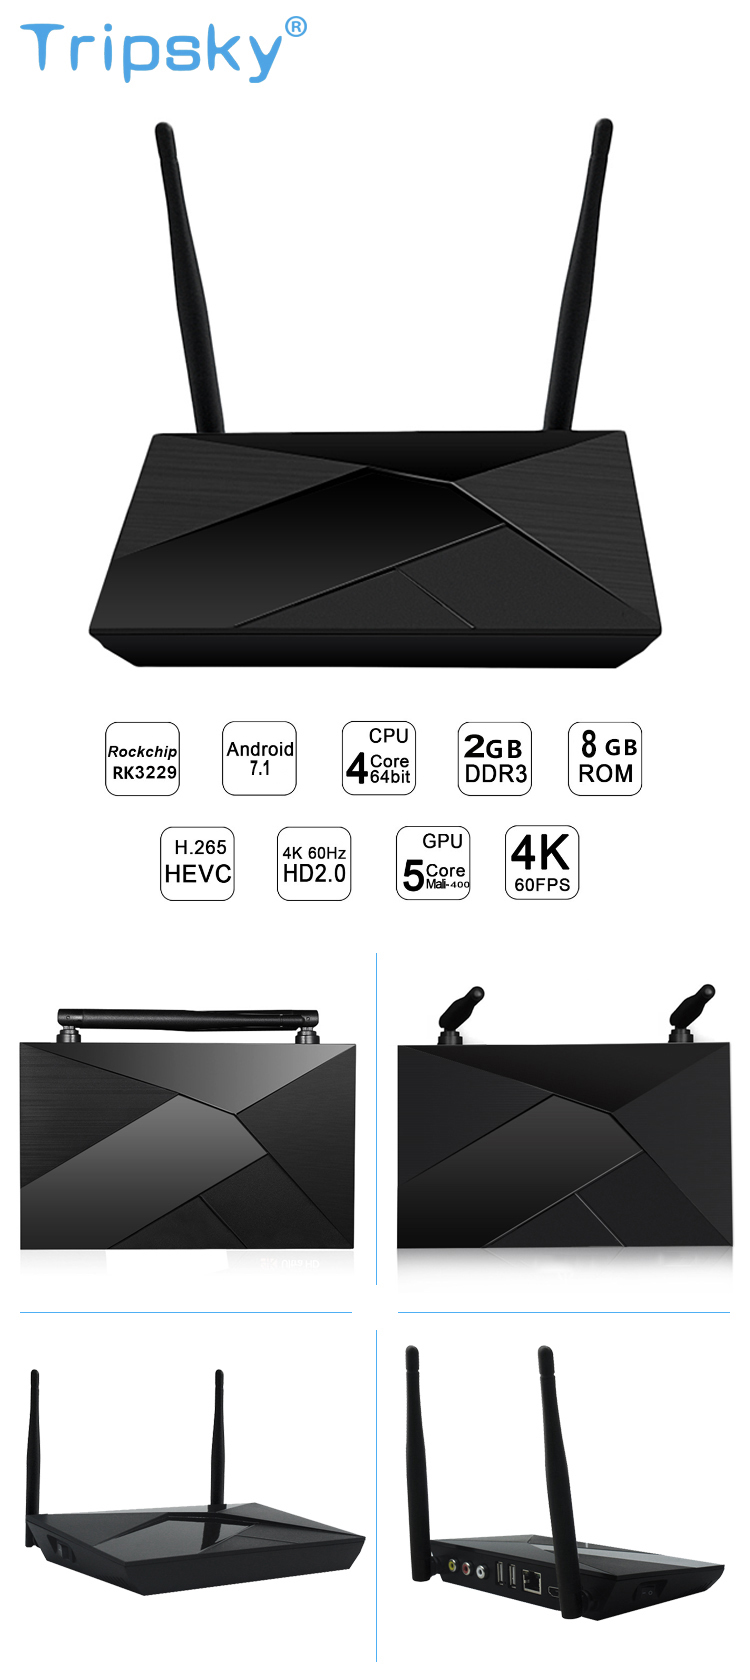 New Arrive High Performance X9 PRO Tv Box Rk3229 2G Ram 8G  Rom Oem Android 7.1 Set Top Box